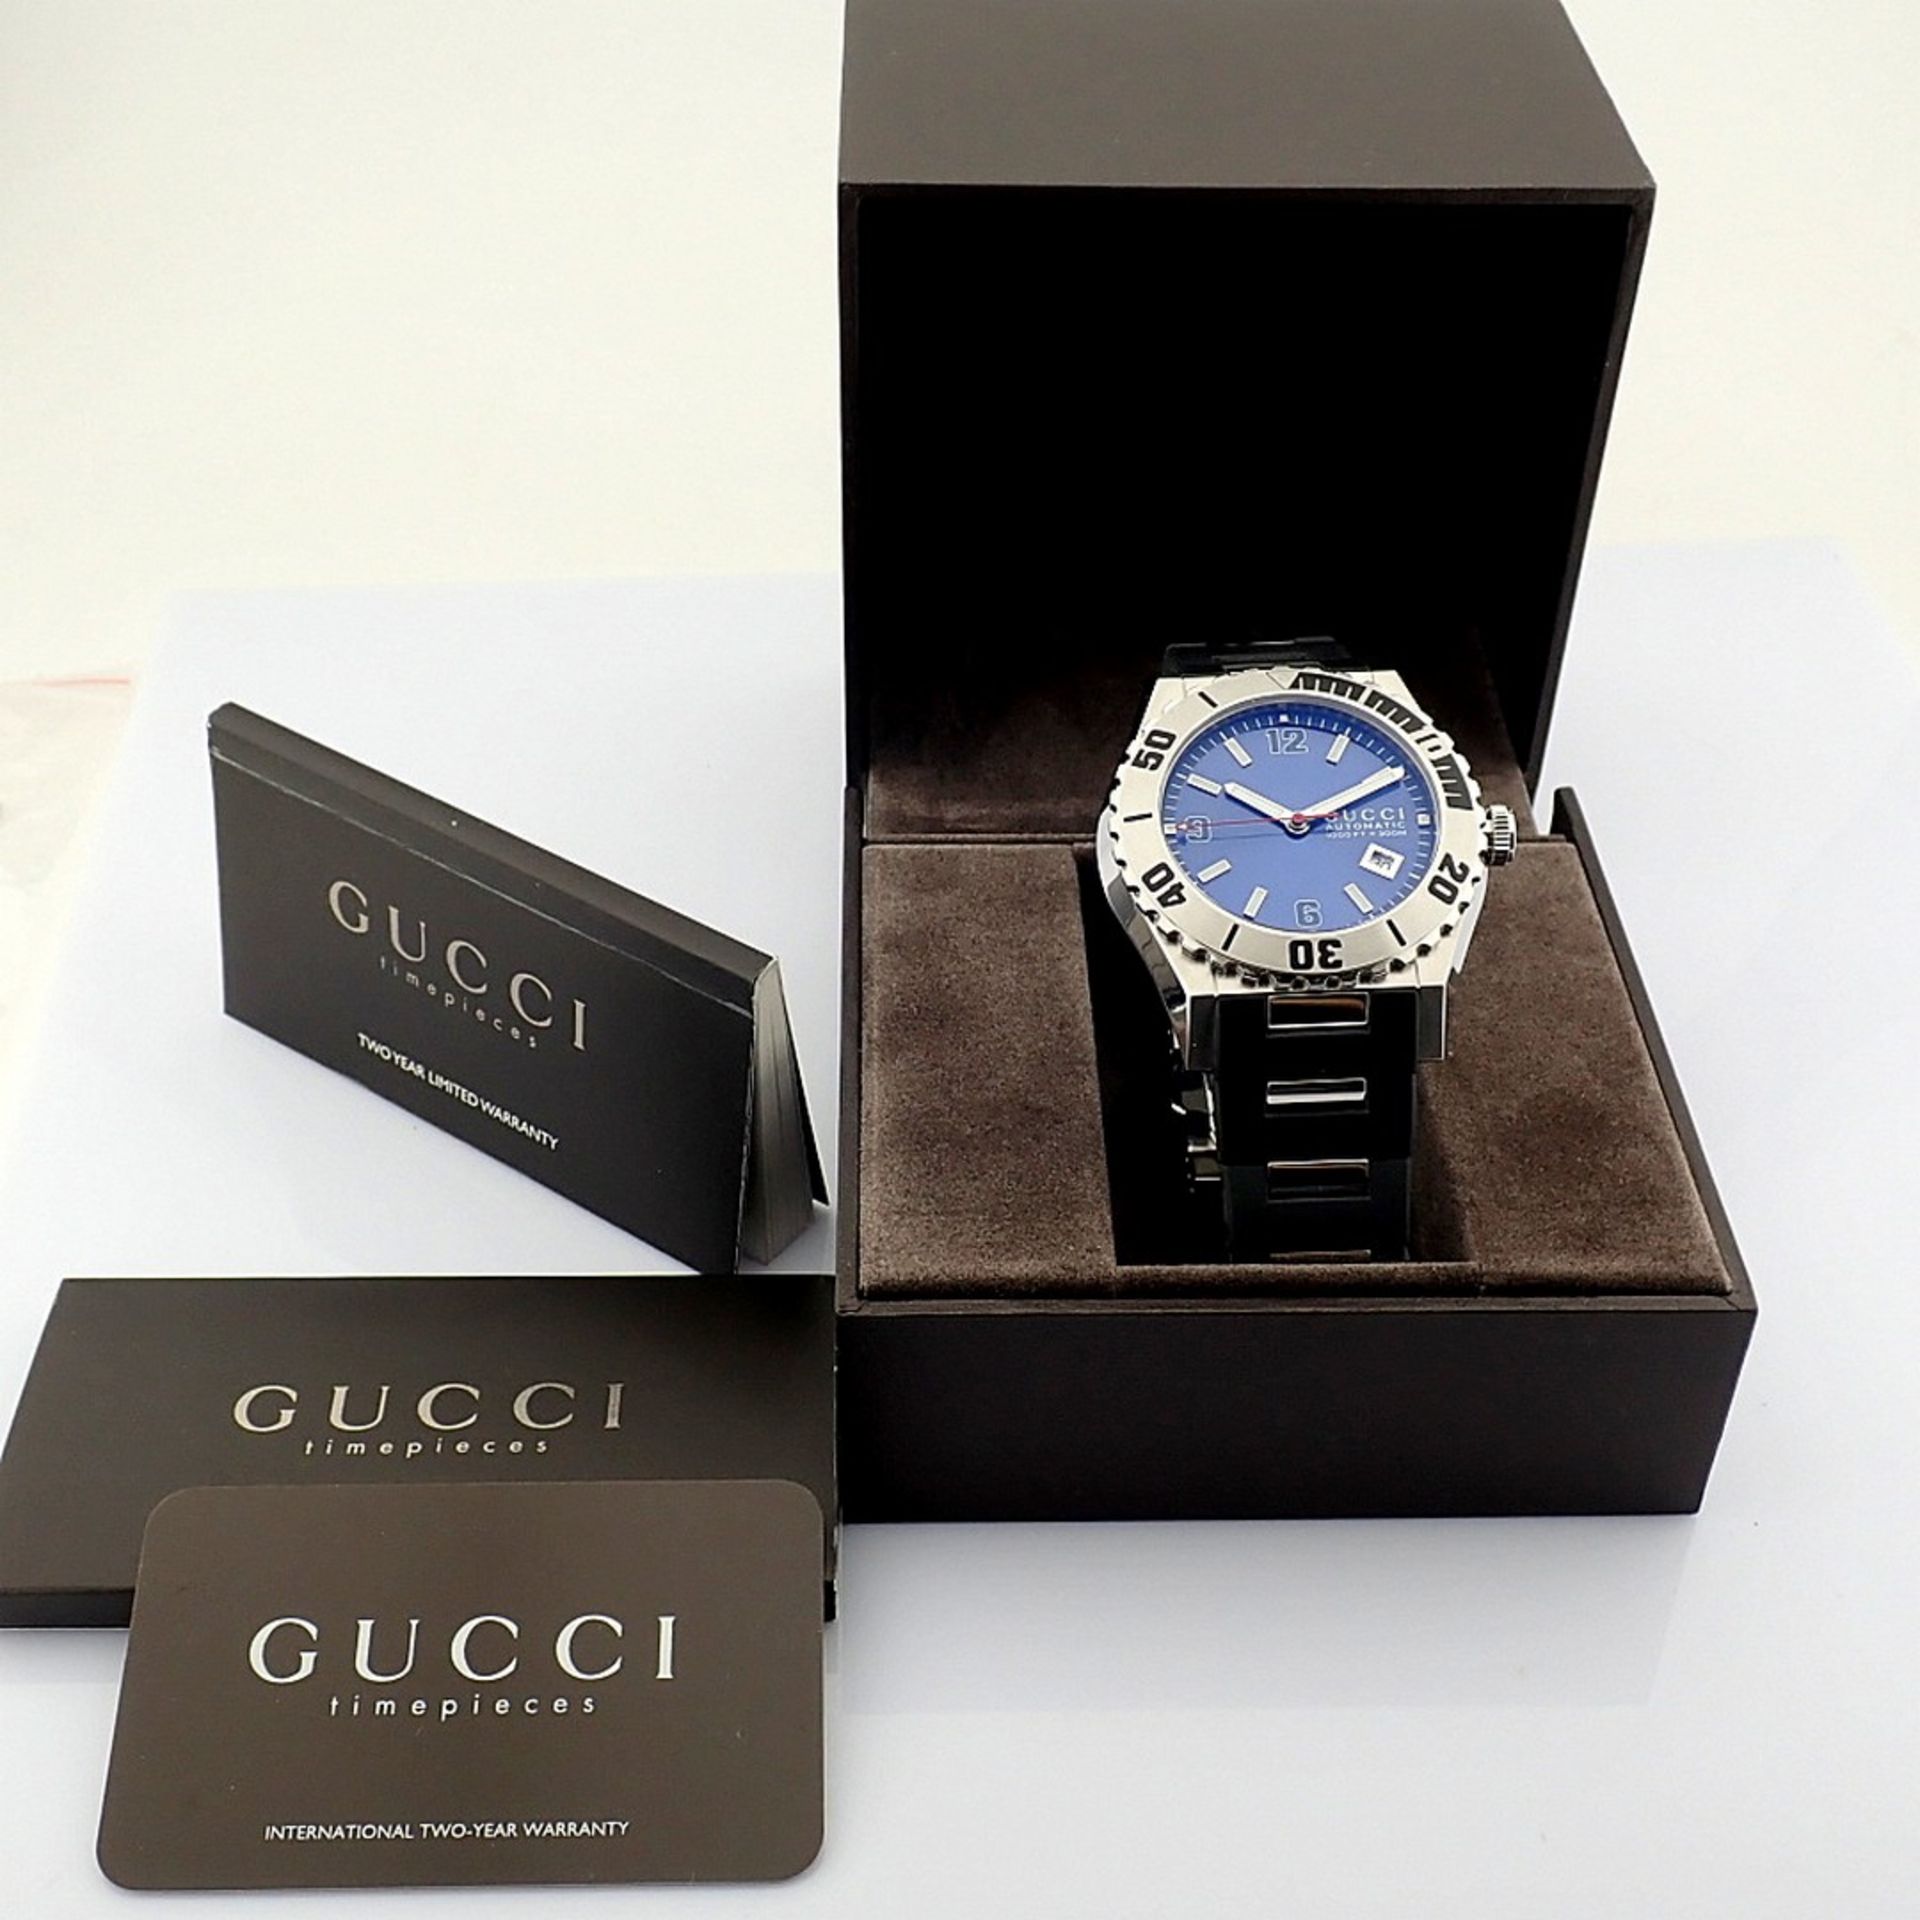 Gucci / Pantheon 115.2 (Brand New) - Gentlmen's Steel Wrist Watch - Image 4 of 13